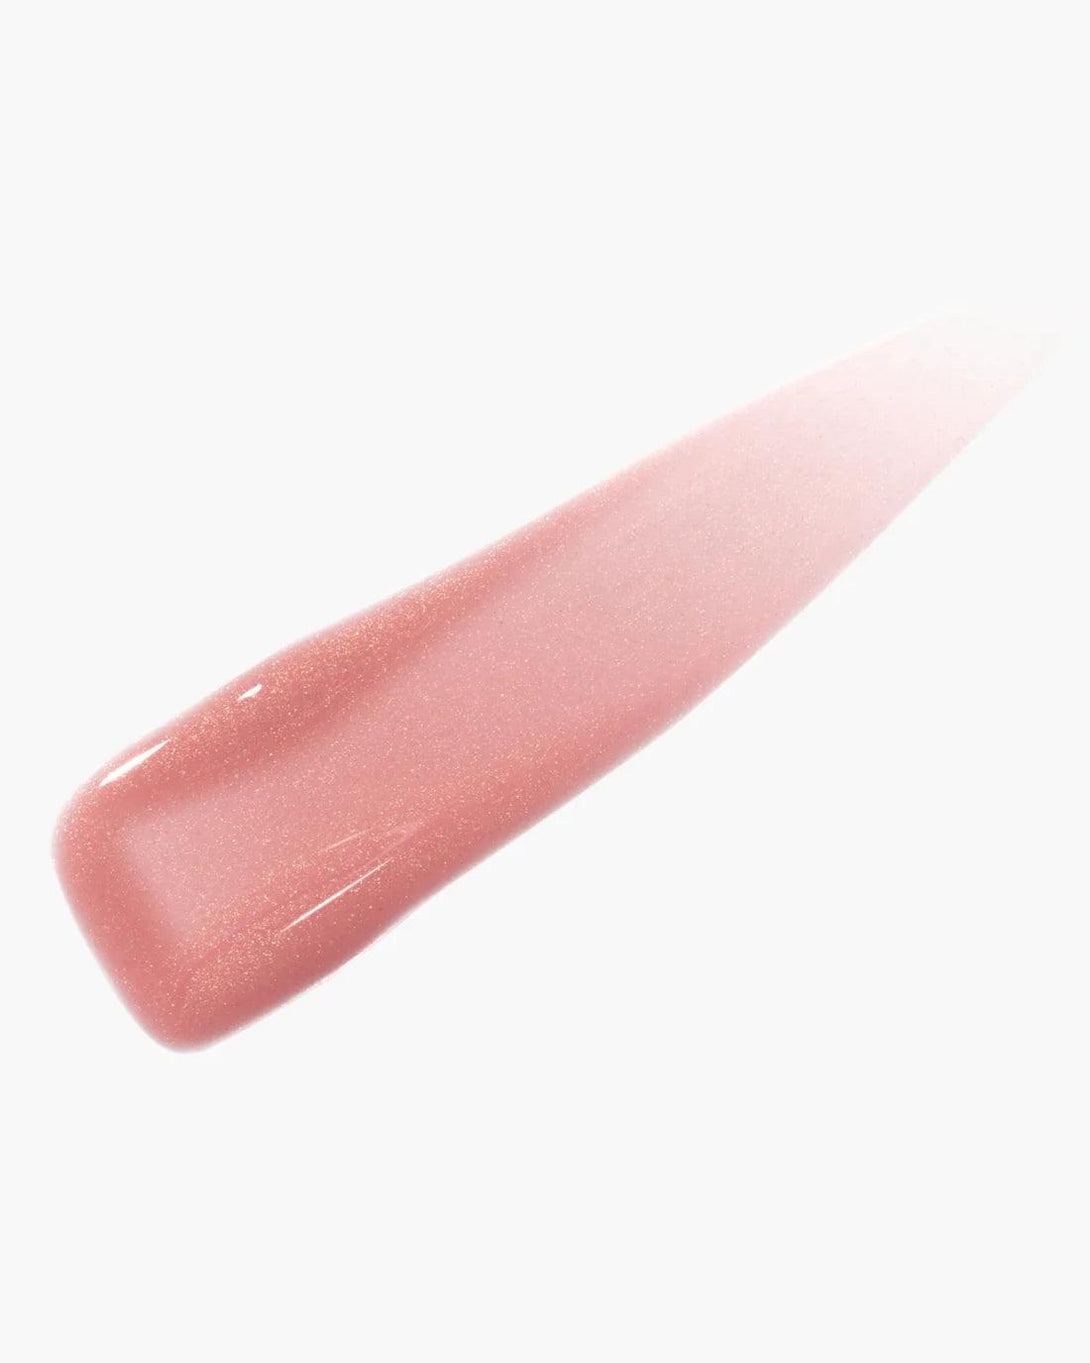 Milk Makeup - Odyssey Lip Oil Gloss hydrating lip gloss - Soul Search Light pink shimmer - Cosmetic Holic